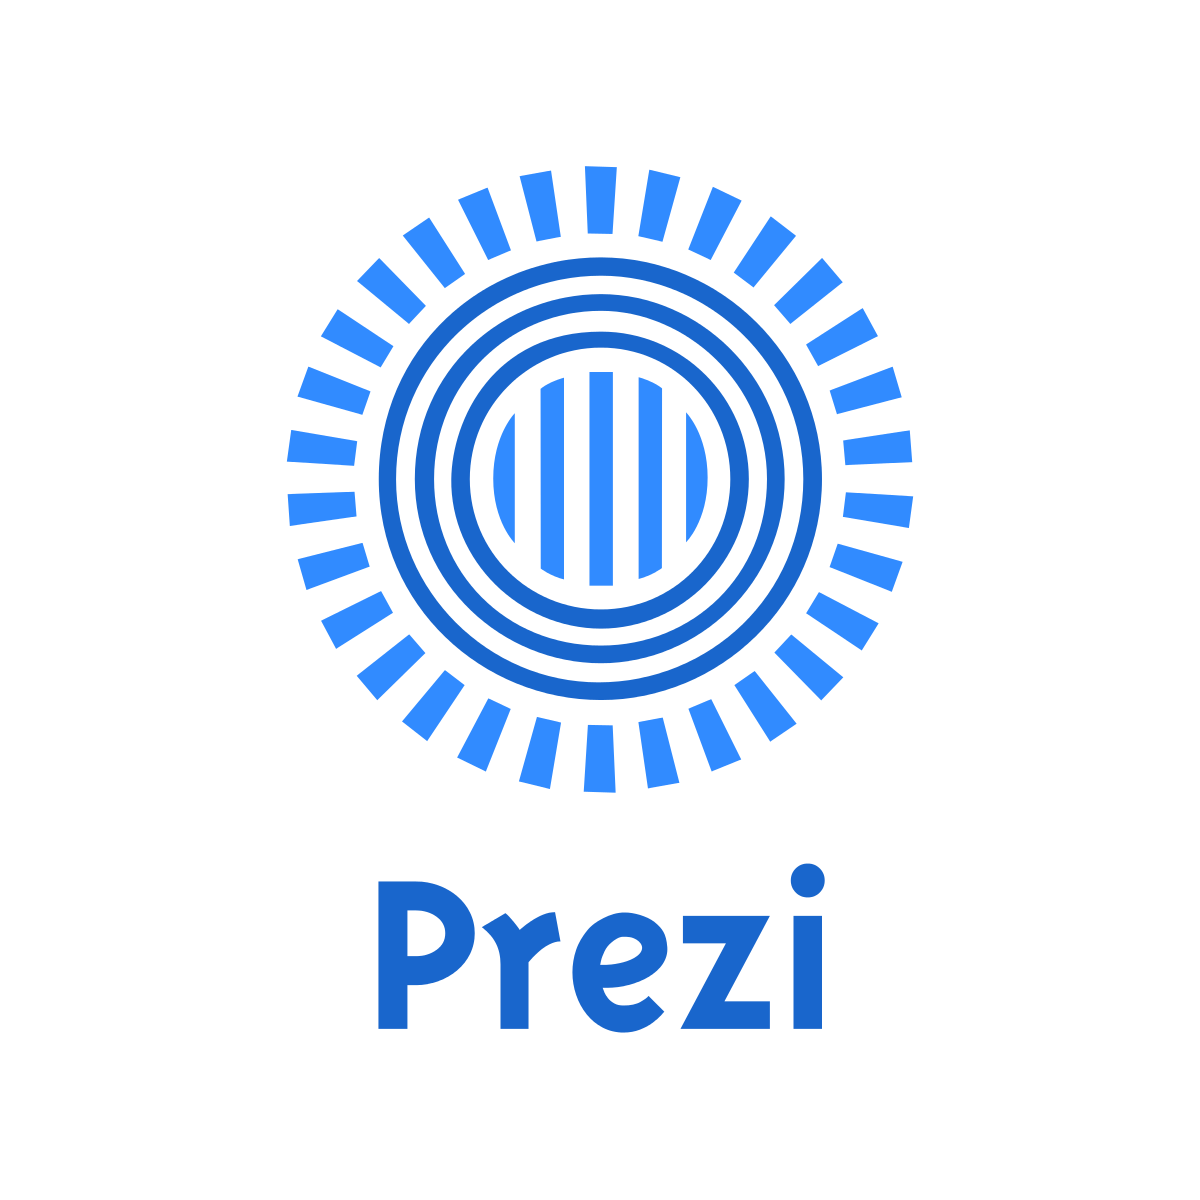 1200px Prezi logo transparent 2012.svg